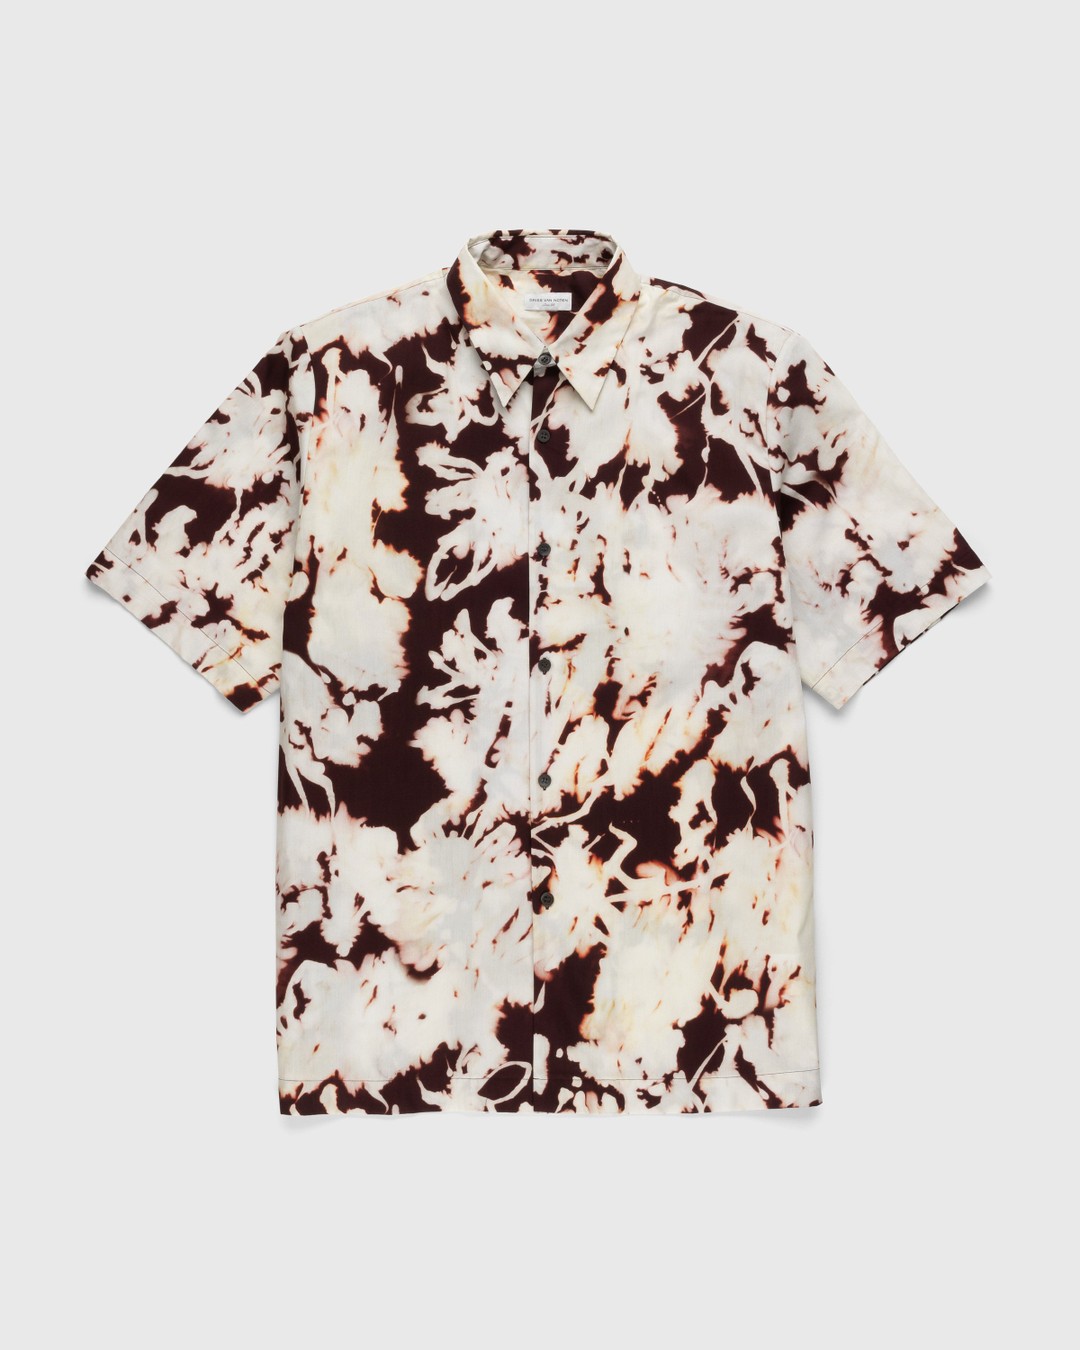 Dries van Noten – Clasen Shirt Multi - Shirts - Multi - Image 1